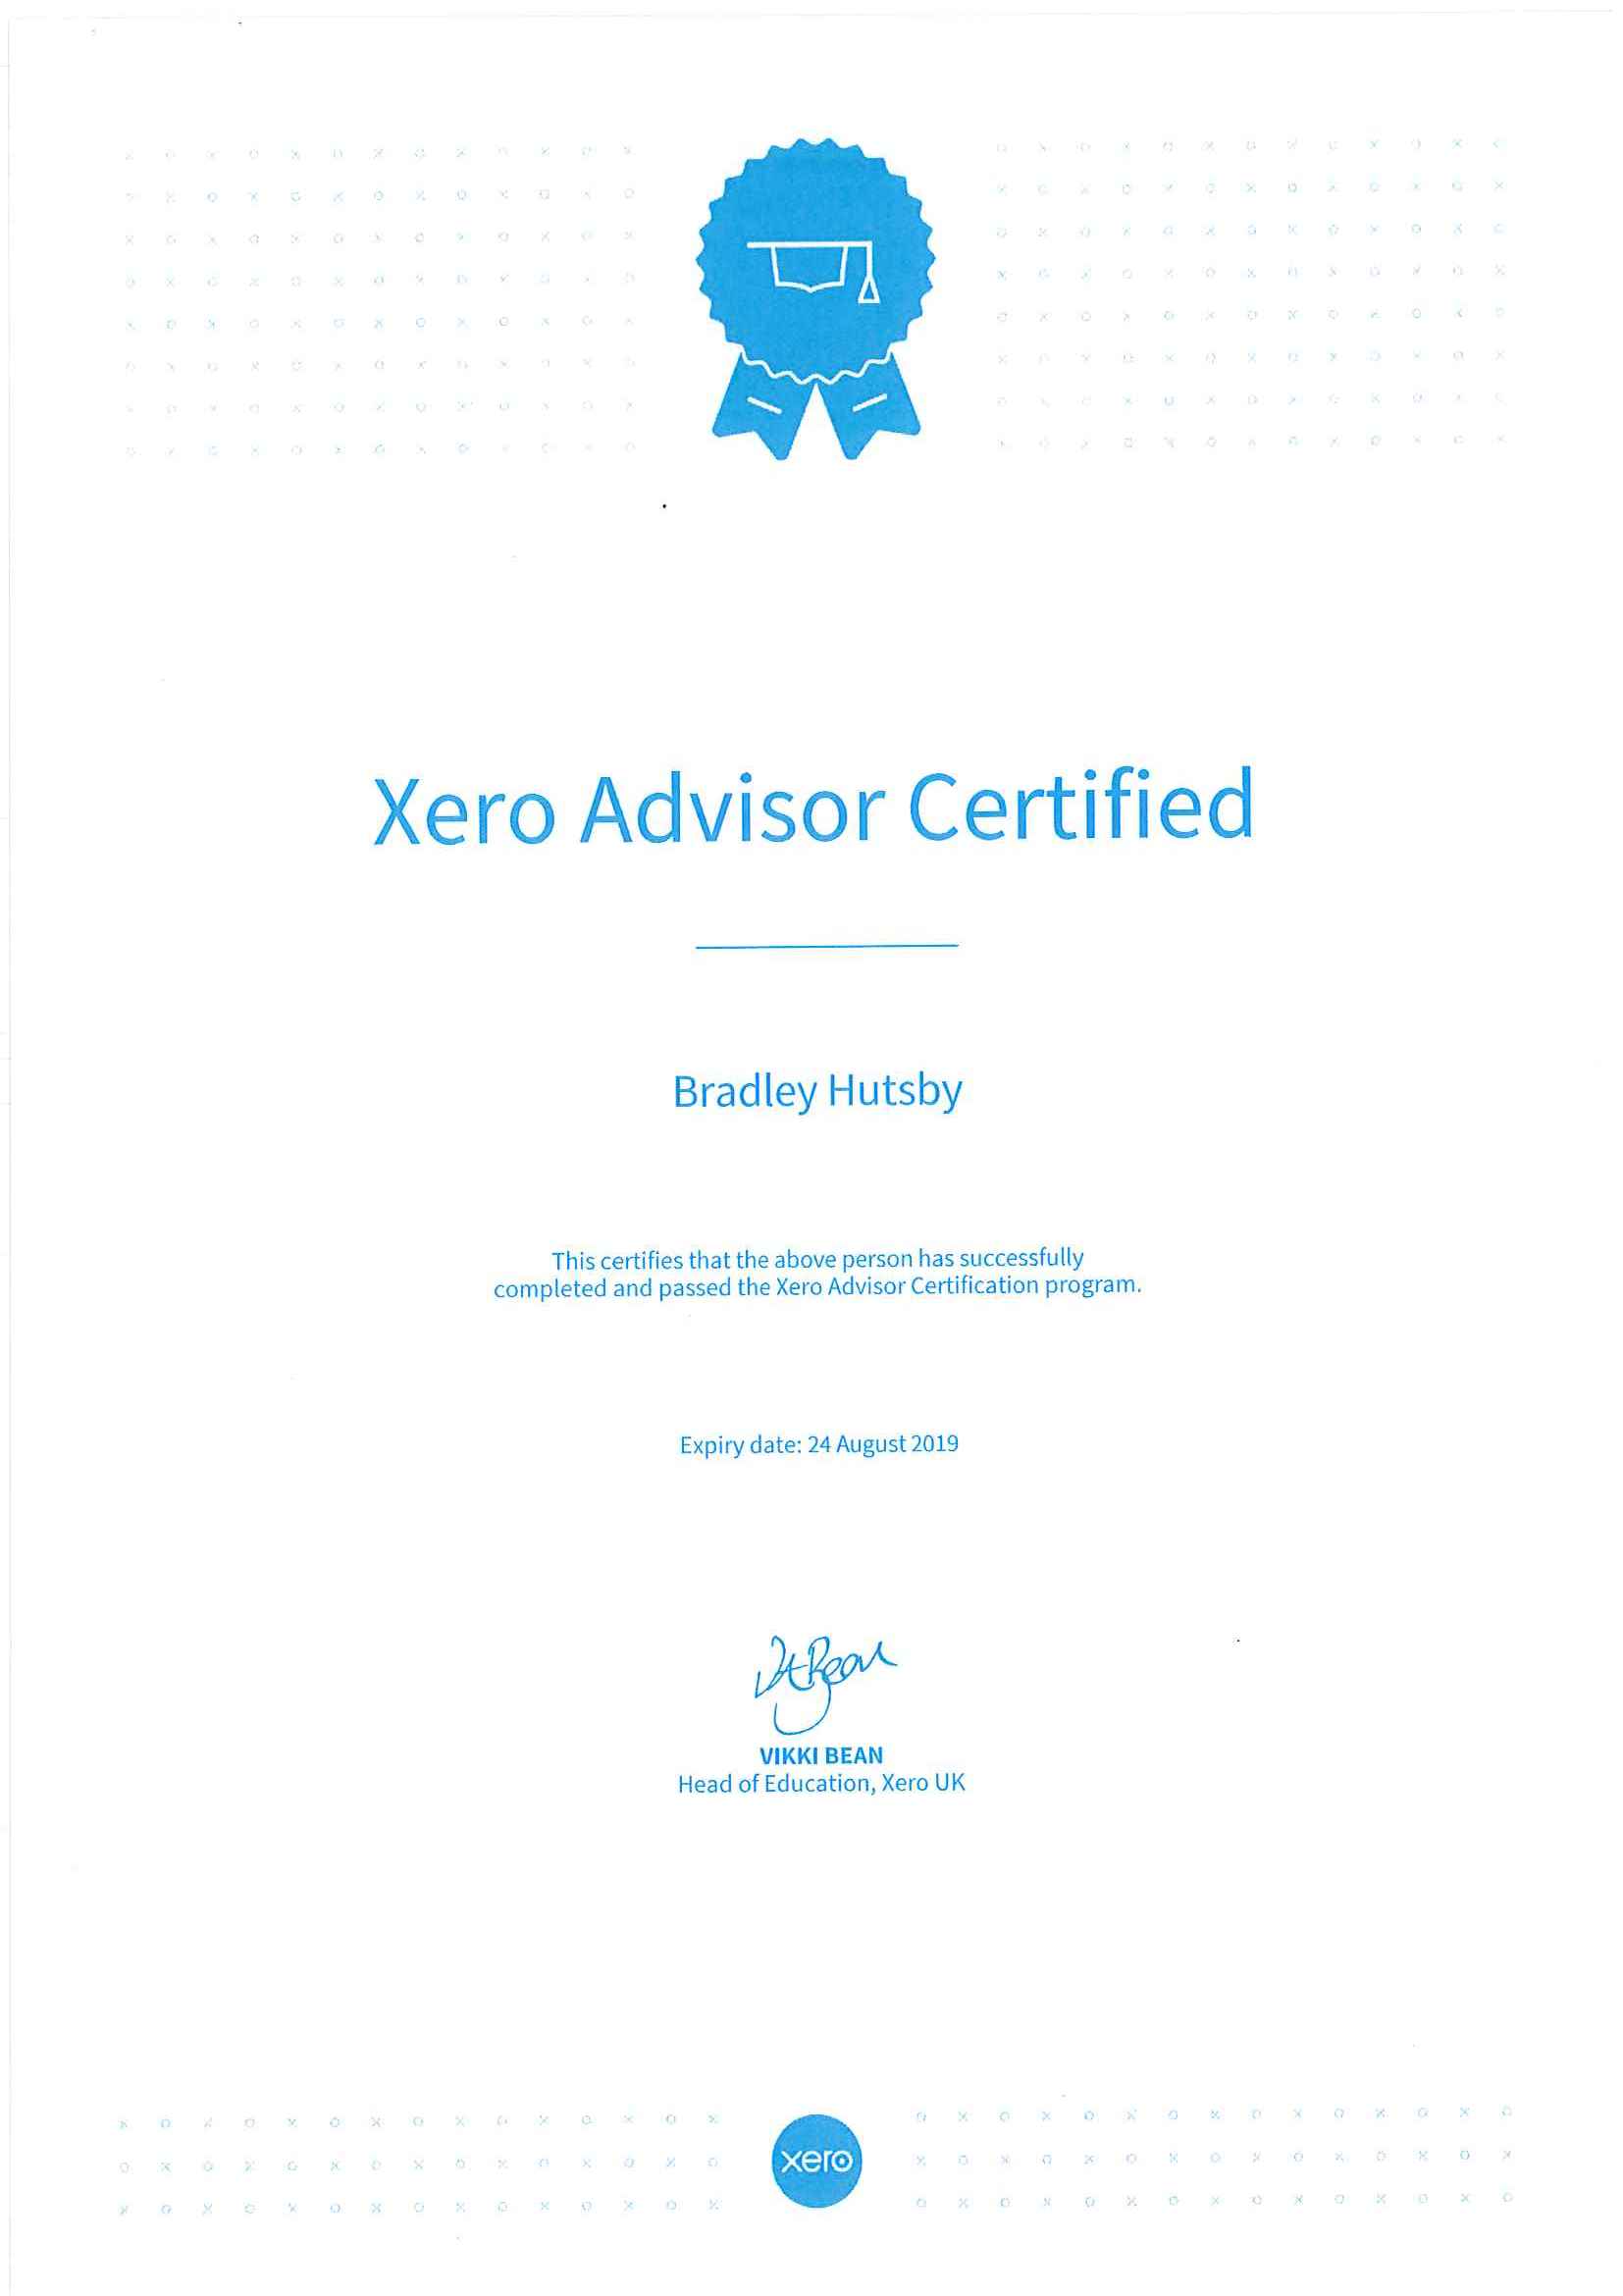 Bradley's Xero Certificate.